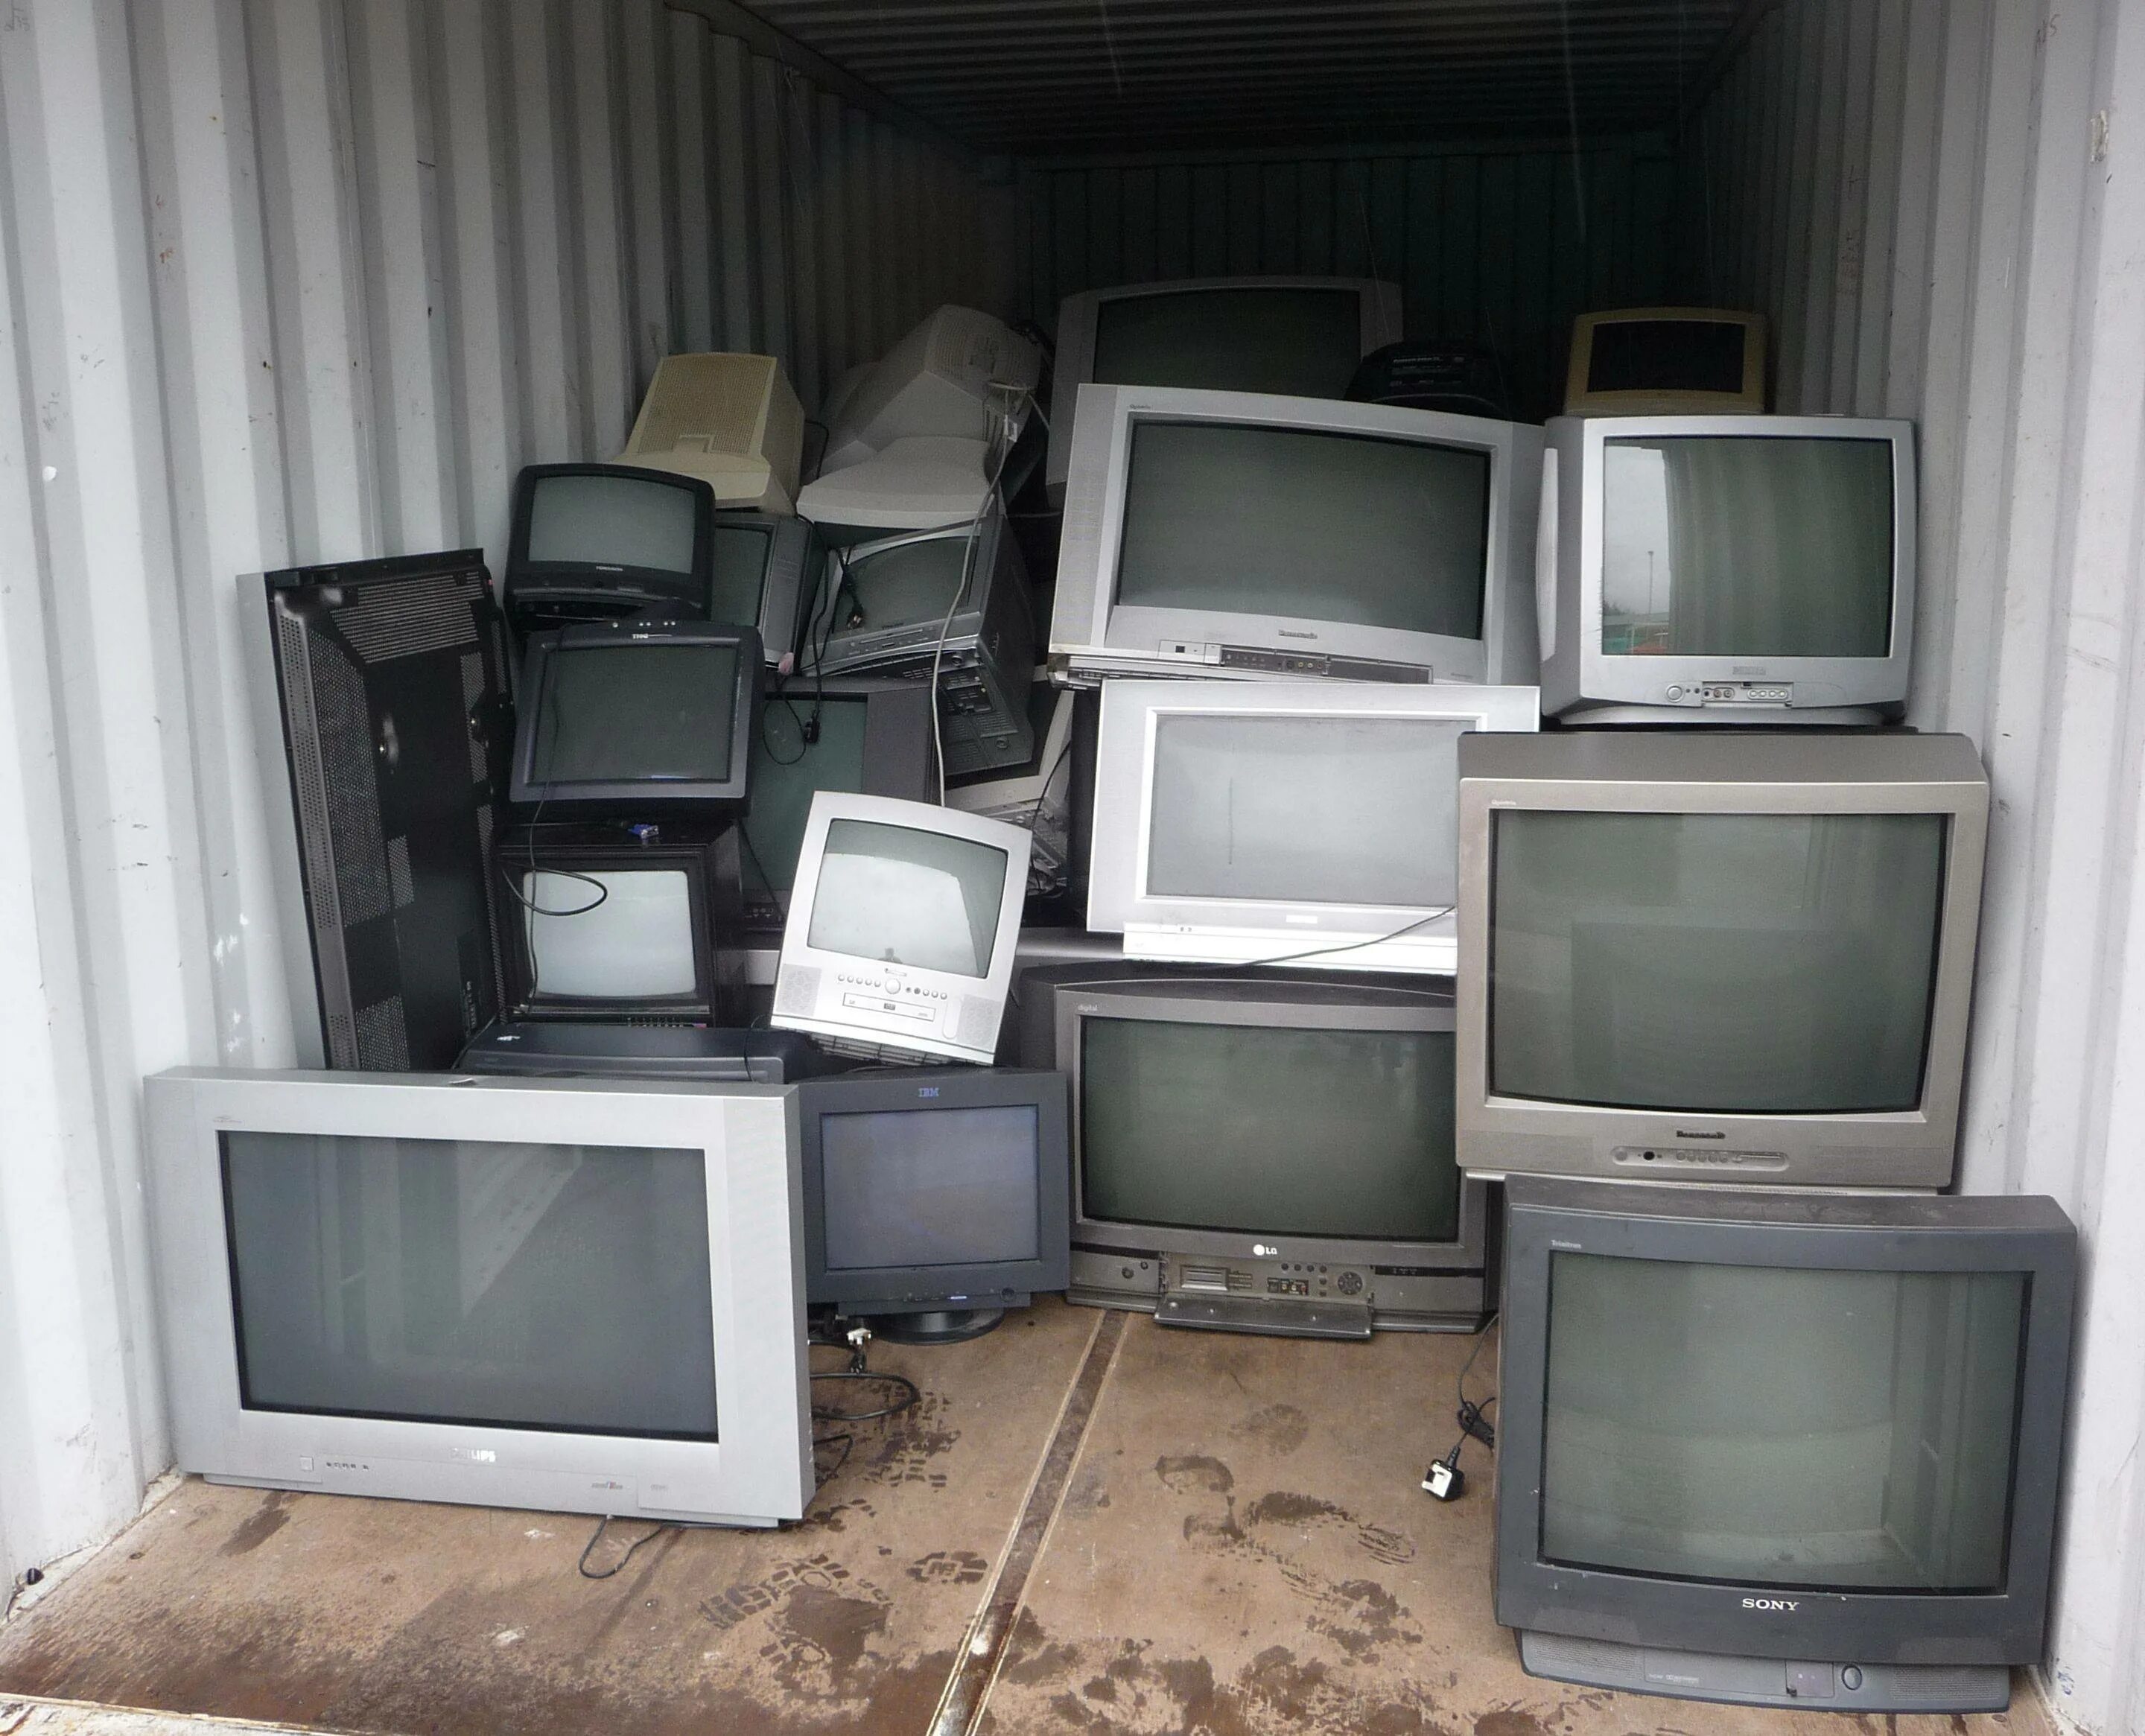 Старый телевизор. Телевизор с кинескопом. Скупают старые телевизоры. Старый кинескопный телевизор. Сдать б у телевизор